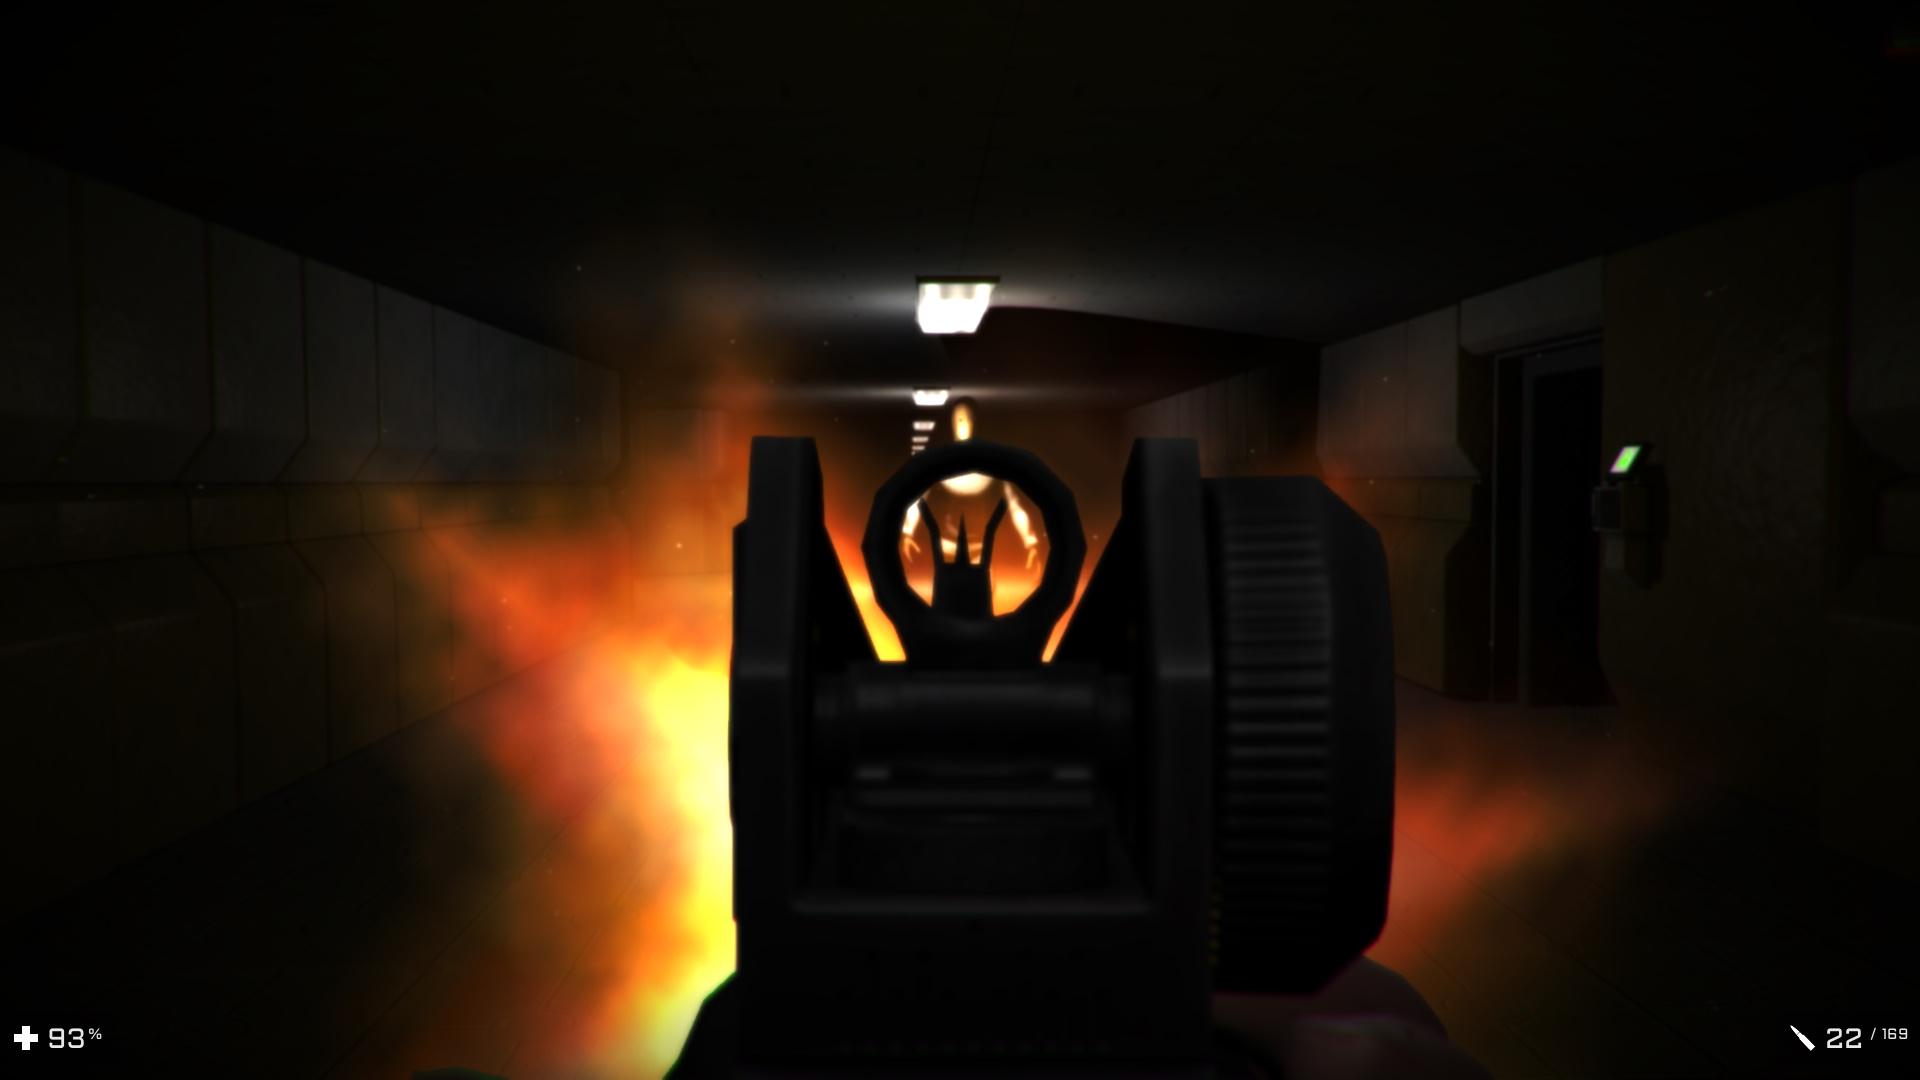 Screenshot №5 from game AMOK